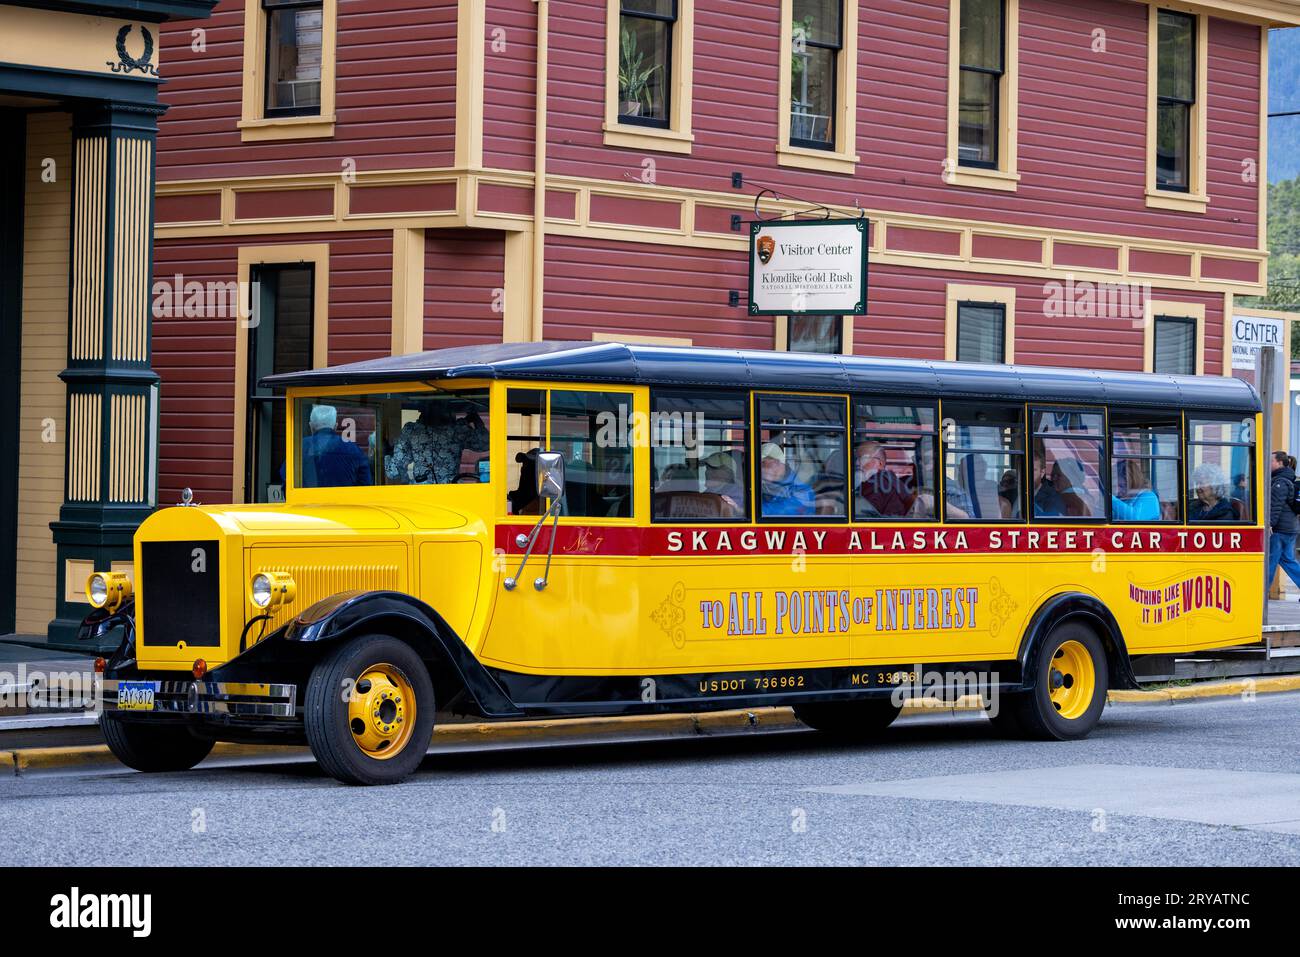 Skagway Alaska Street Car Tour - Skagway, Alaska, USA Stock Photo